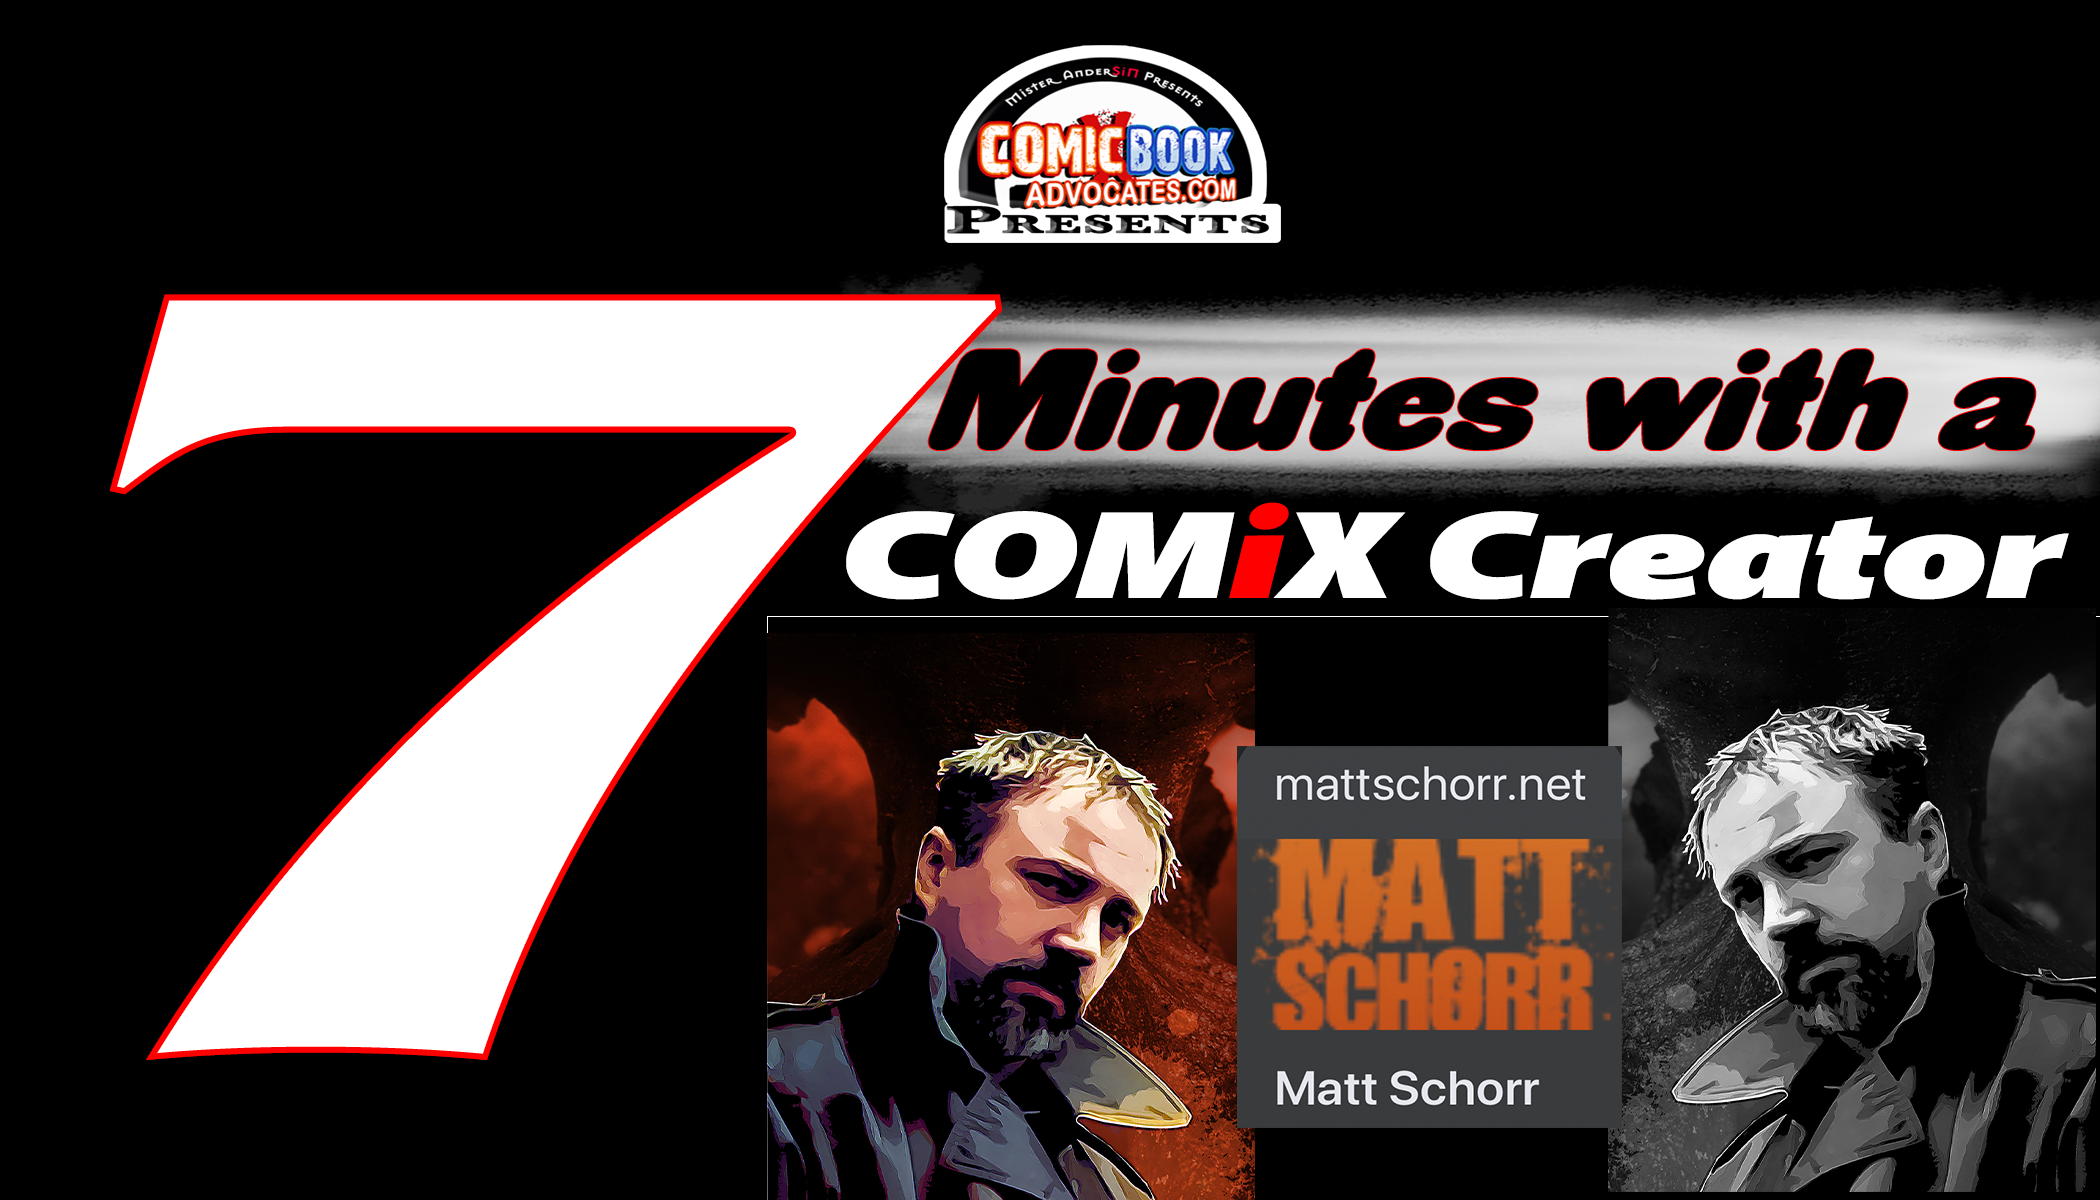 ComicBookADVOCATE.com Presents 7 mins with COMiX Creator: Matt Schorr